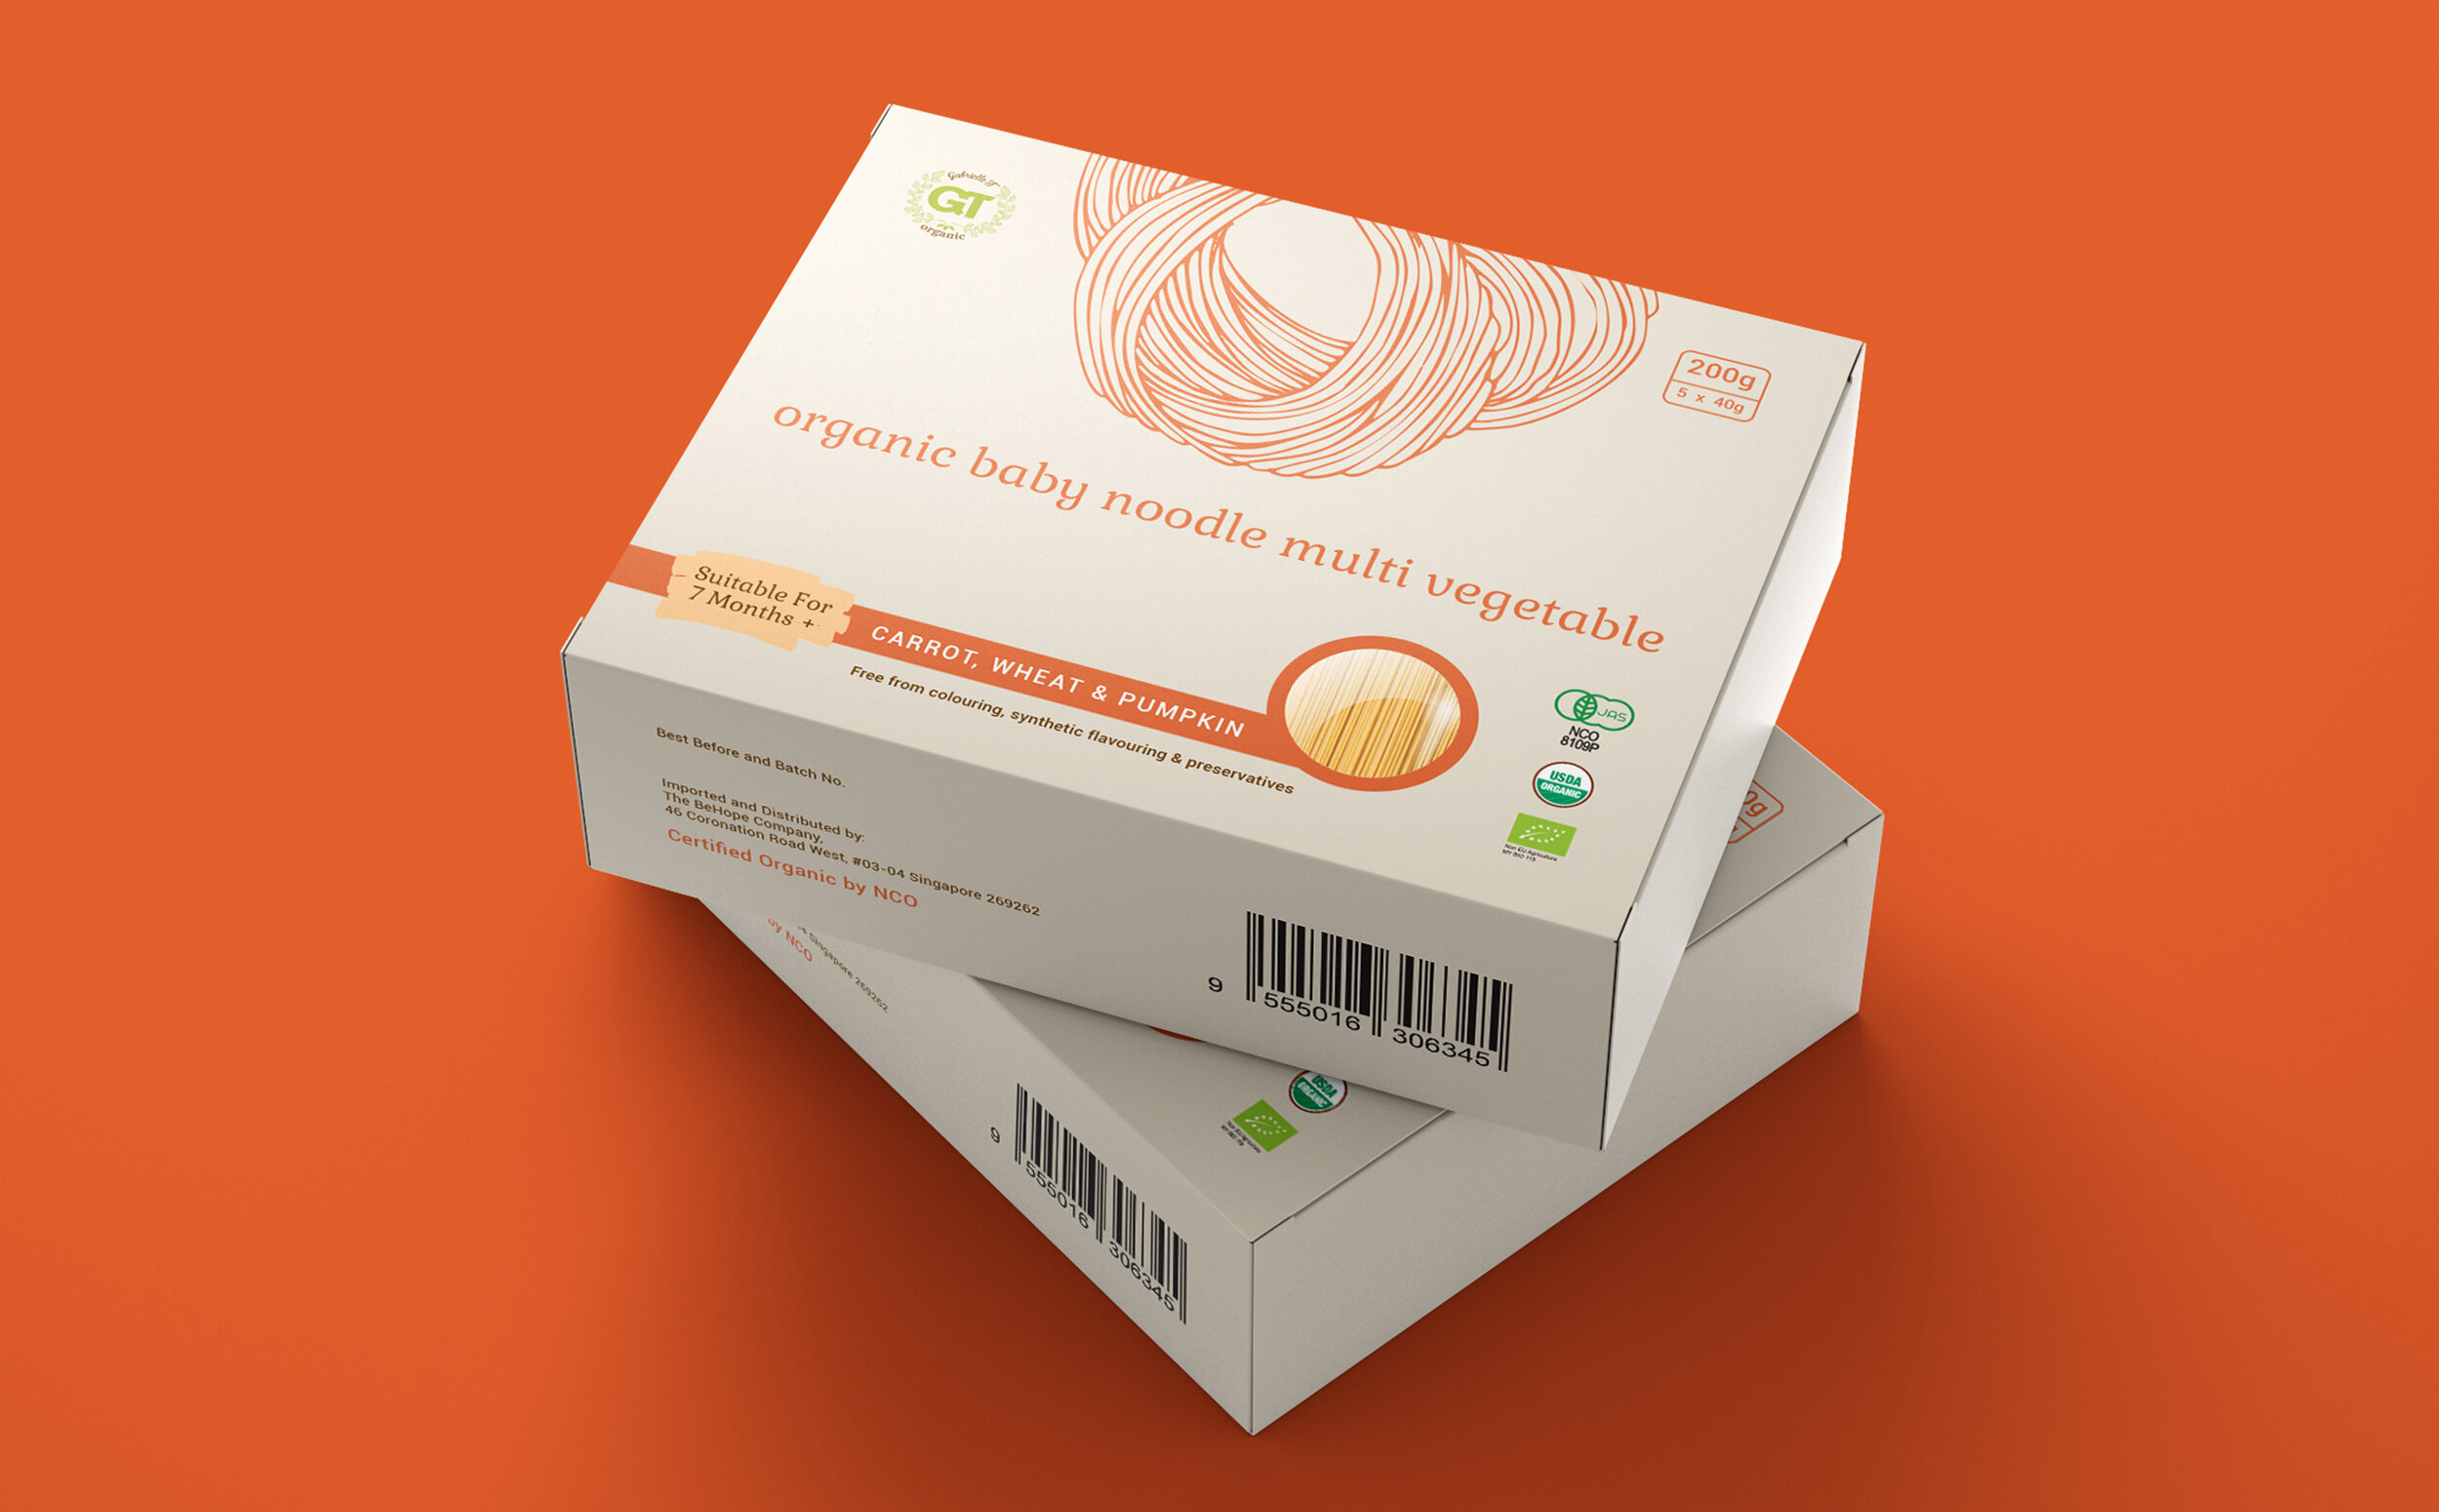 Gabrielle T Organic Baby Noodles Box 1 (Packaging Design by YANA Singapore Freelance Designer).jpg